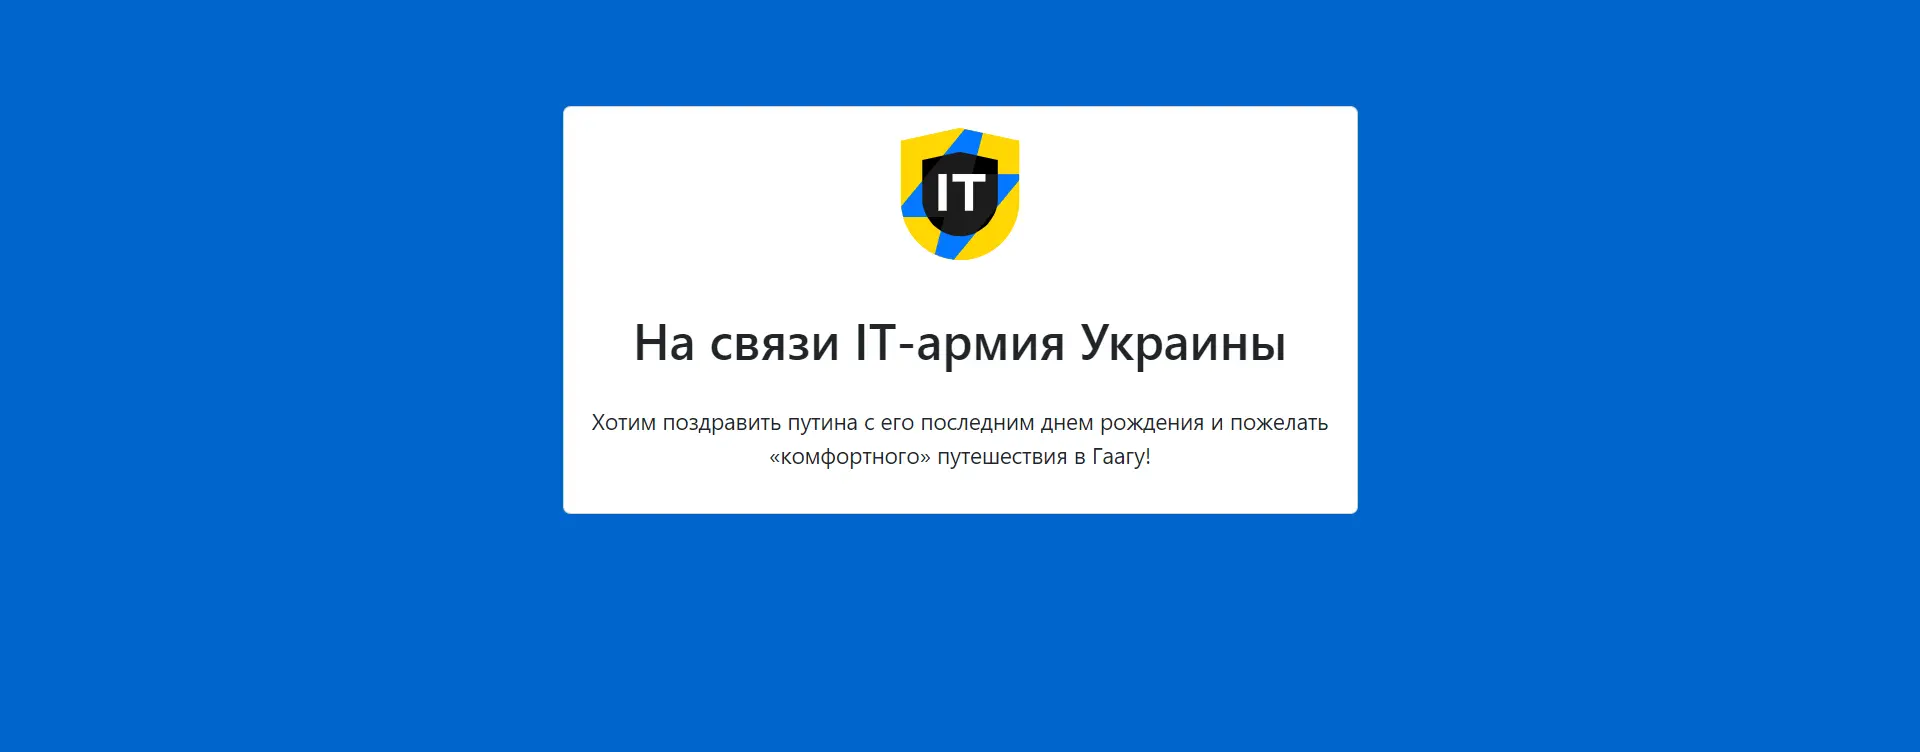 cyberattacks 2022 - Ukrainian hackers hacked the CSTO website